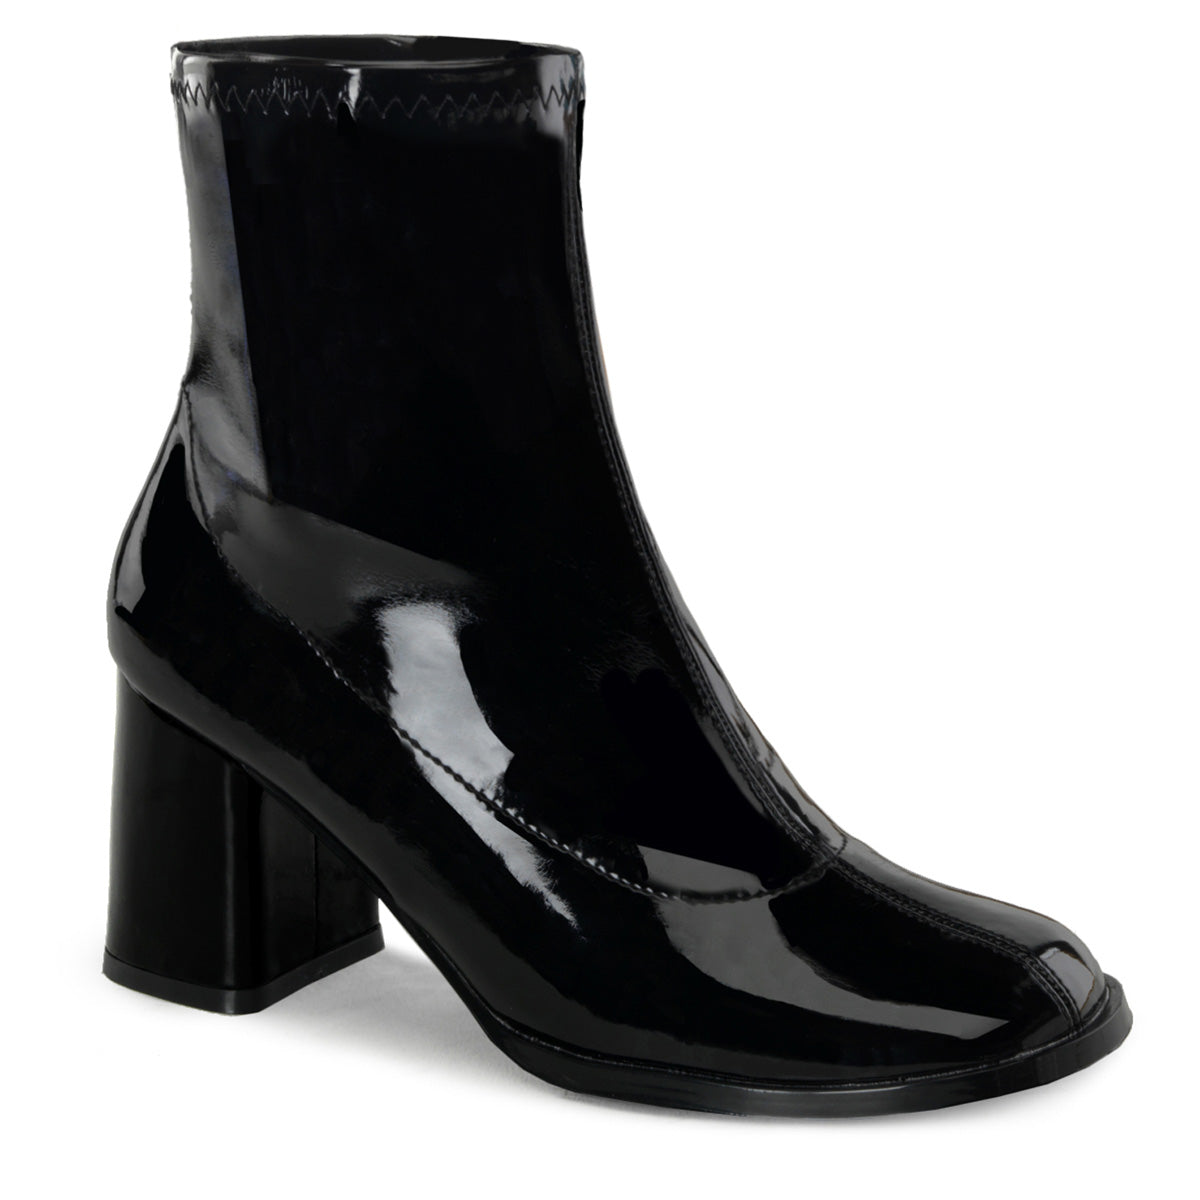 GOGO-150 Pleasers Funtasma 3" Heel Black Stretch Patent Women's Boots